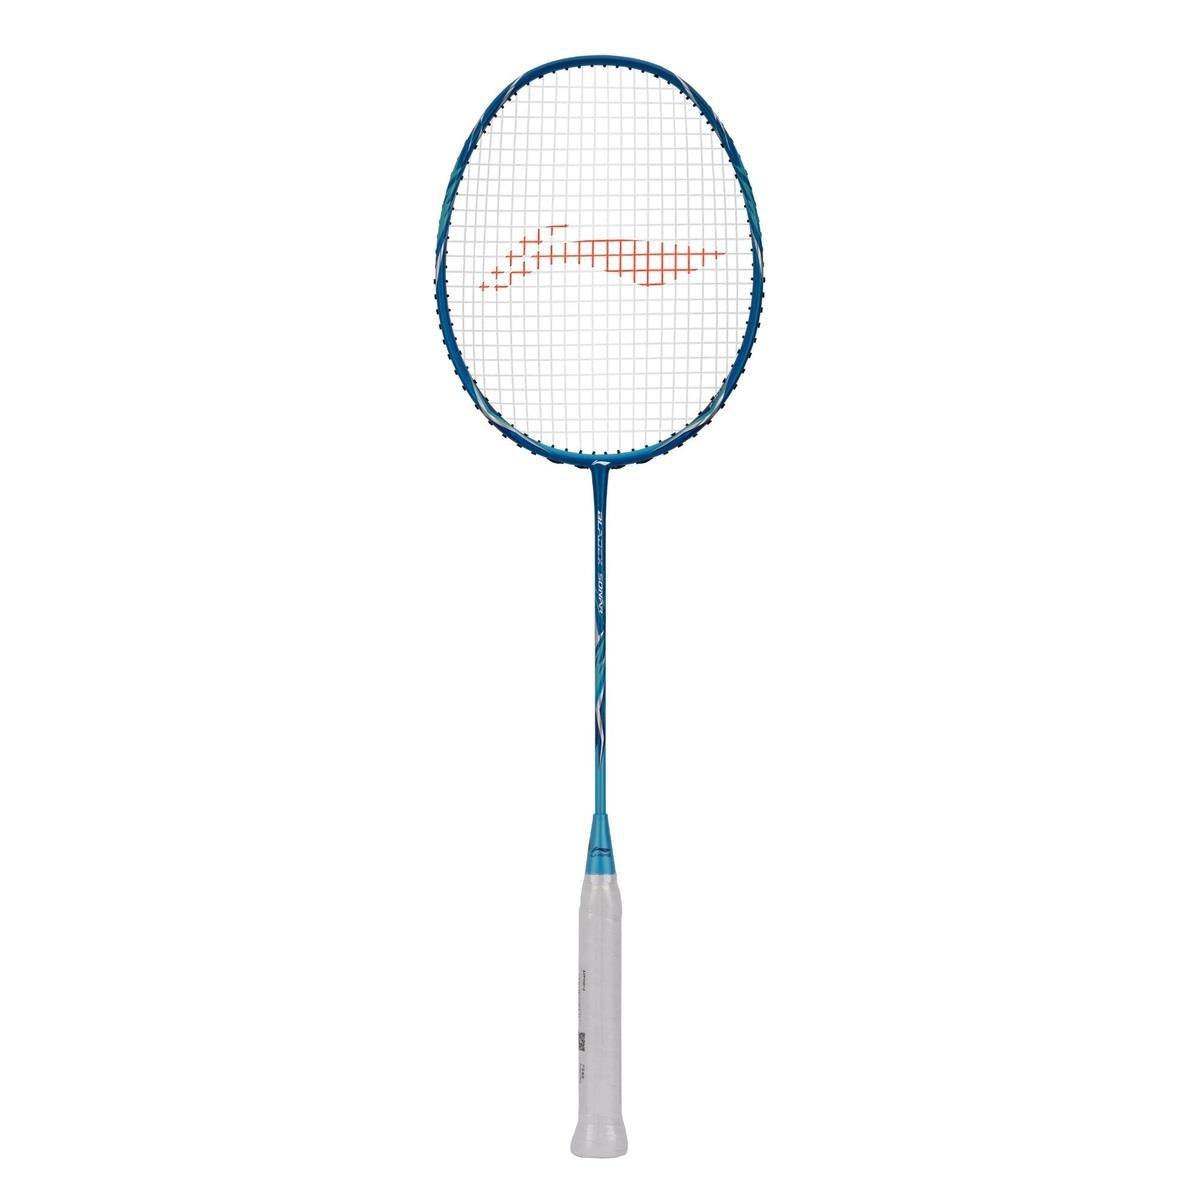 Li-Ning BladeX Sonar 3U Badminton Racket - Blue - Single